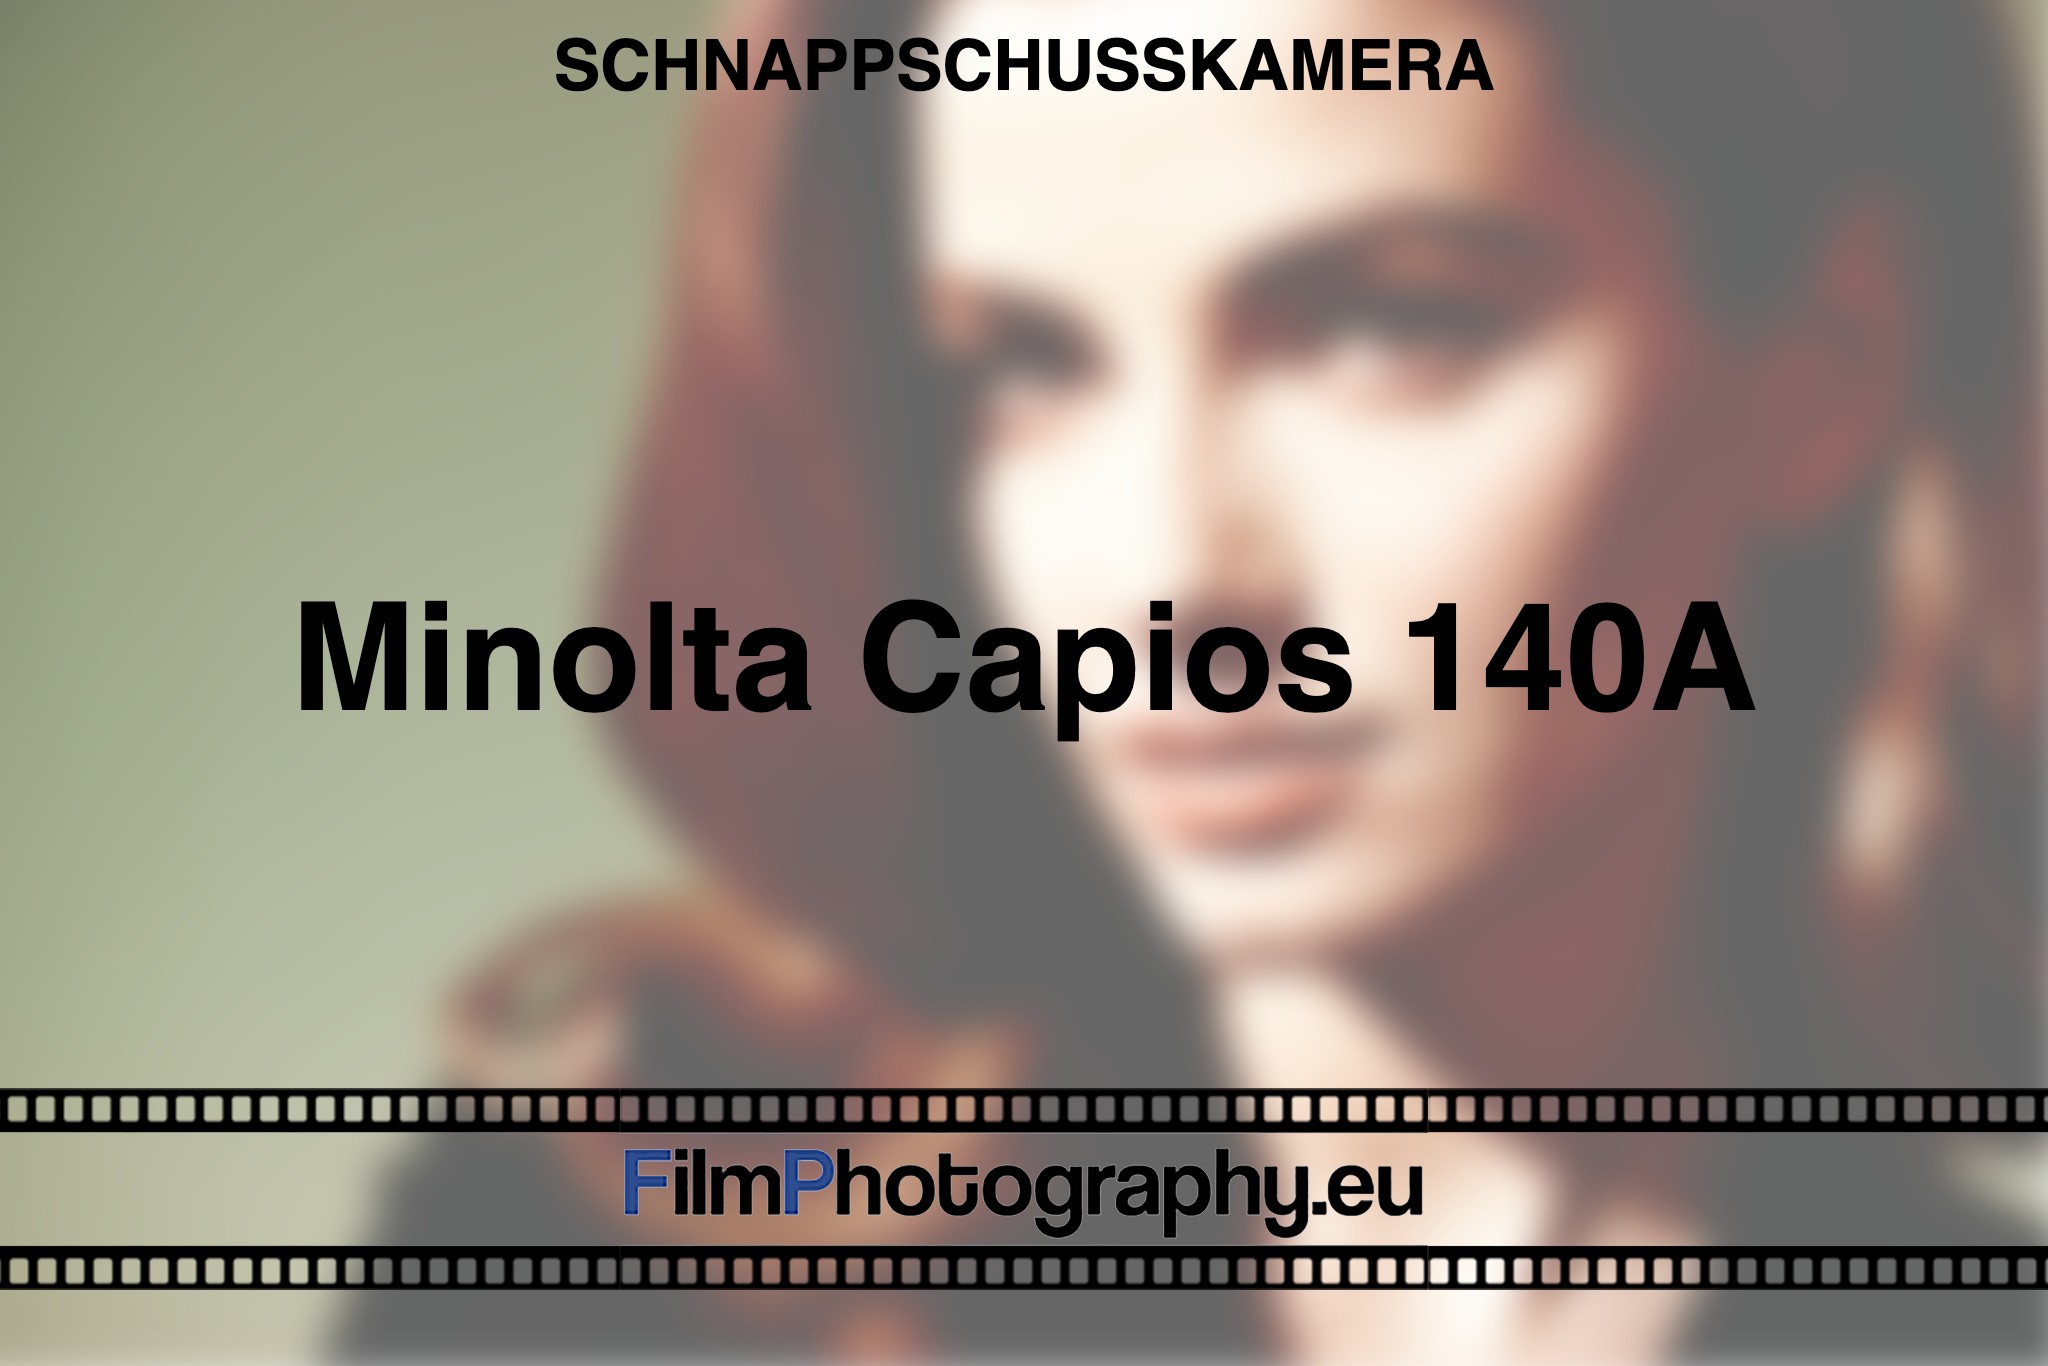 minolta-capios-140a-schnappschusskamera-bnv